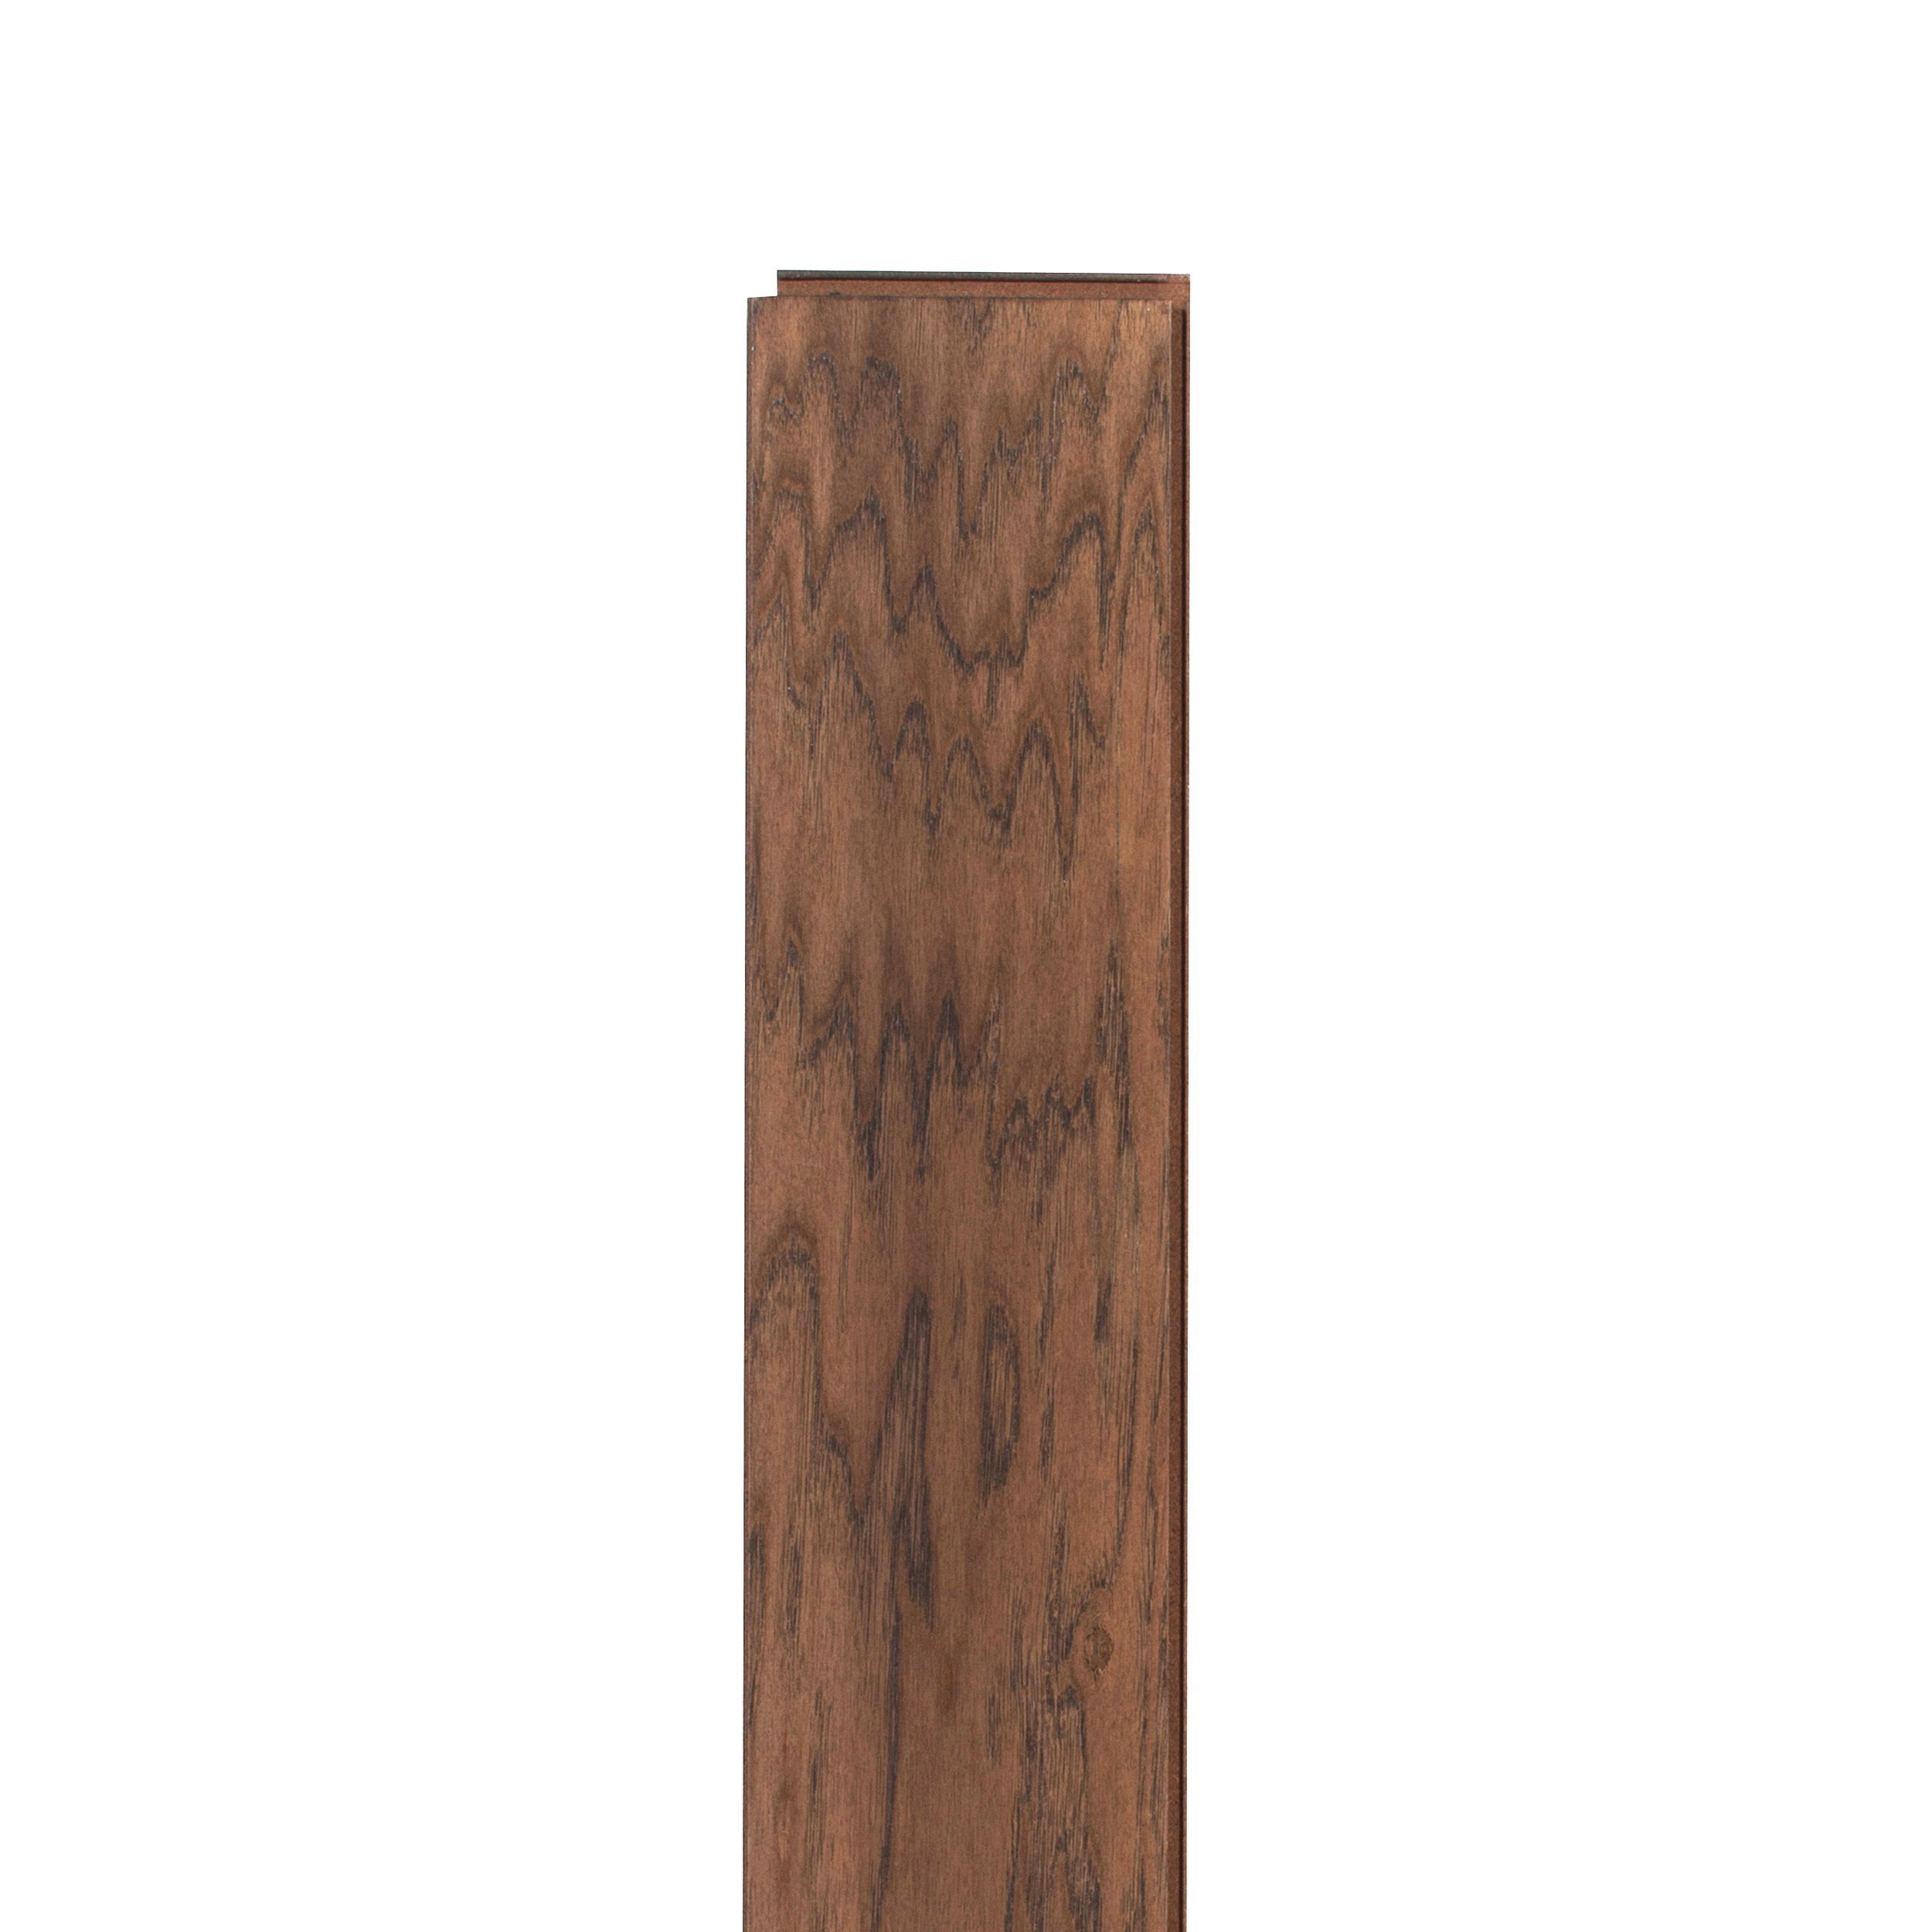 Floor and Decor Engineered Hardwood Unique Engineered Hardwood Flooring